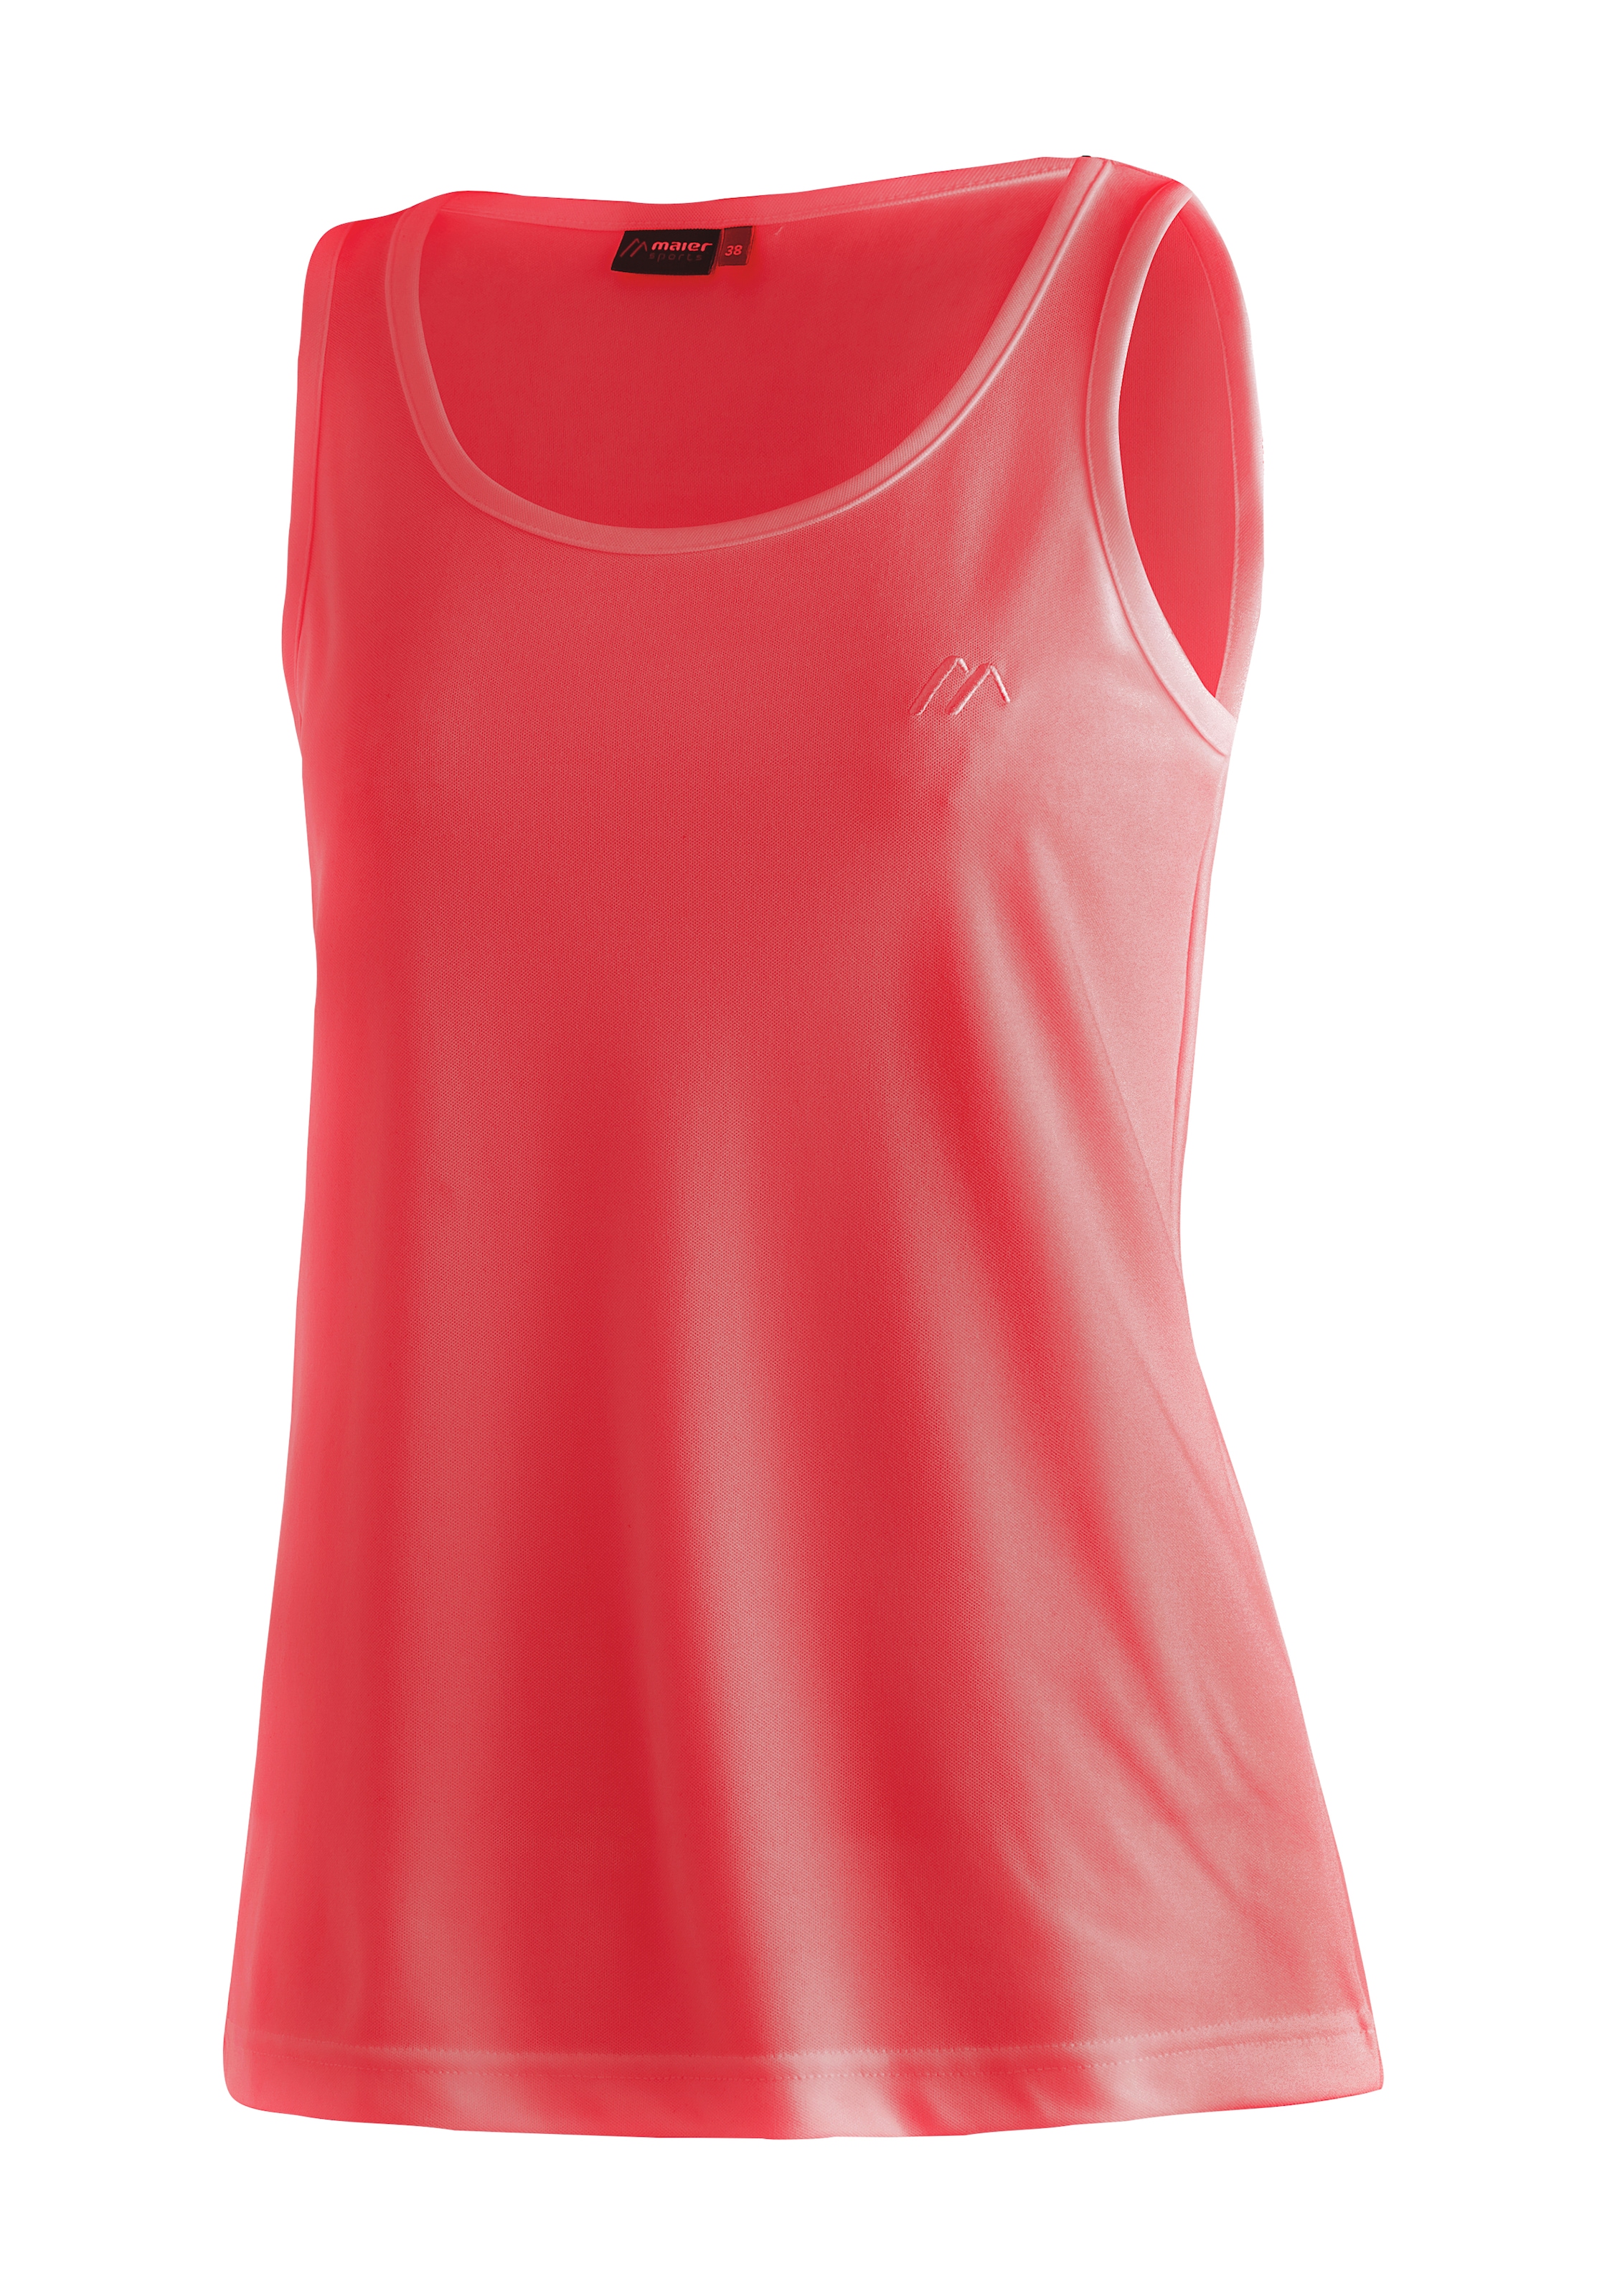 Maier Sports Funktionsshirt »Petra«, Damen kaufen Outdoor-Aktivitäten, Shirt Tank-Top ärmelloses für und Sport